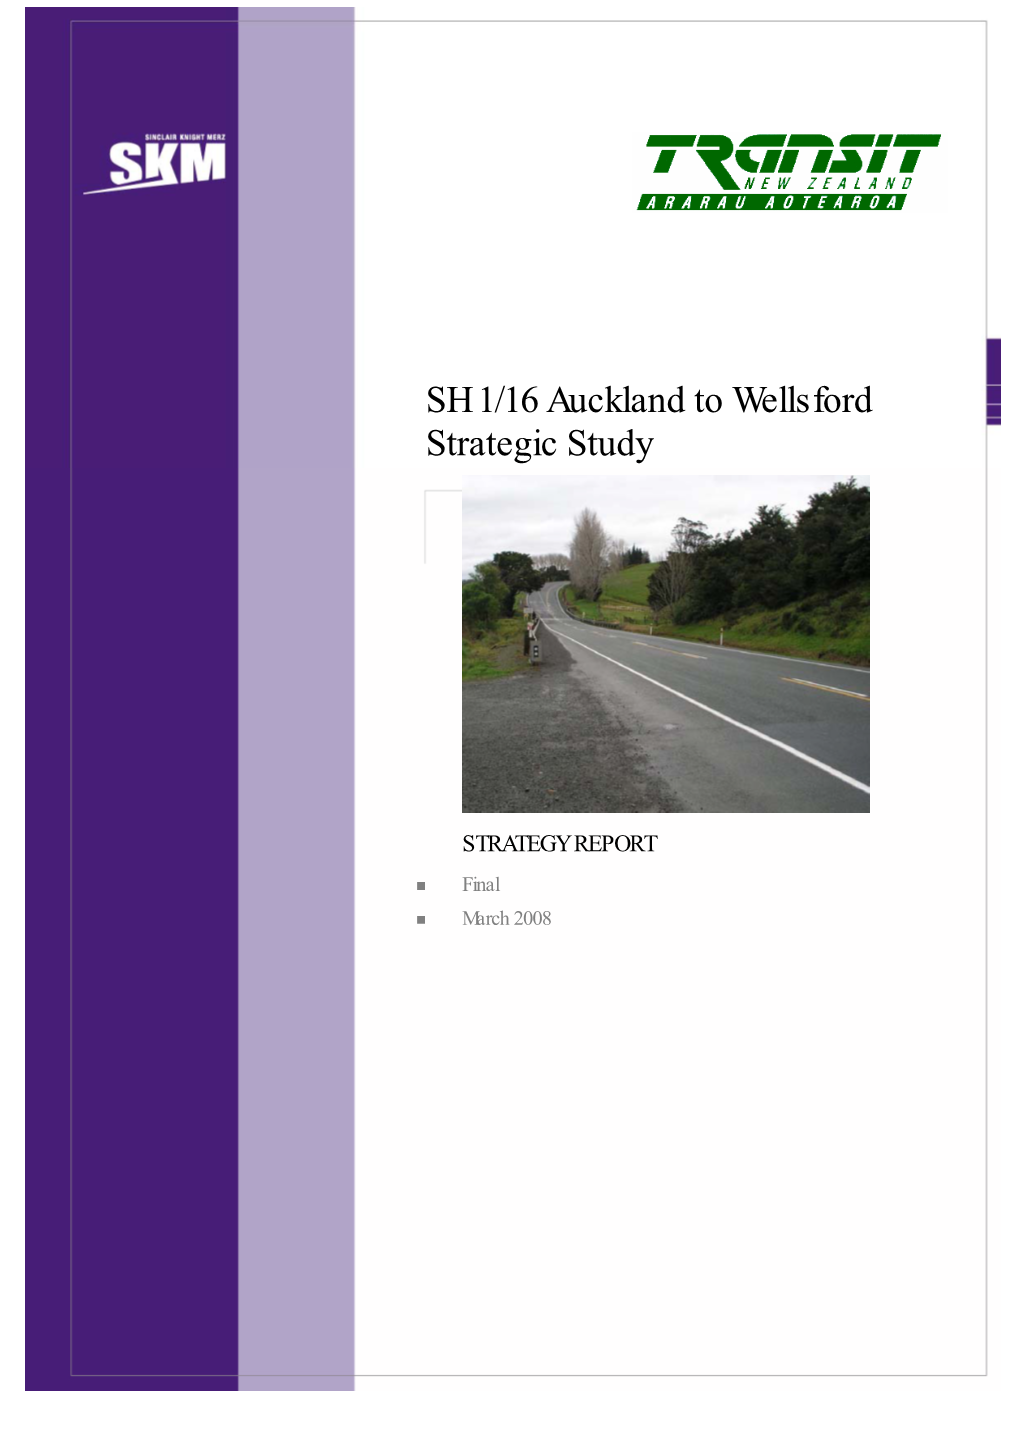 SH 1/16 Auckland to Wellsford Strategic Study